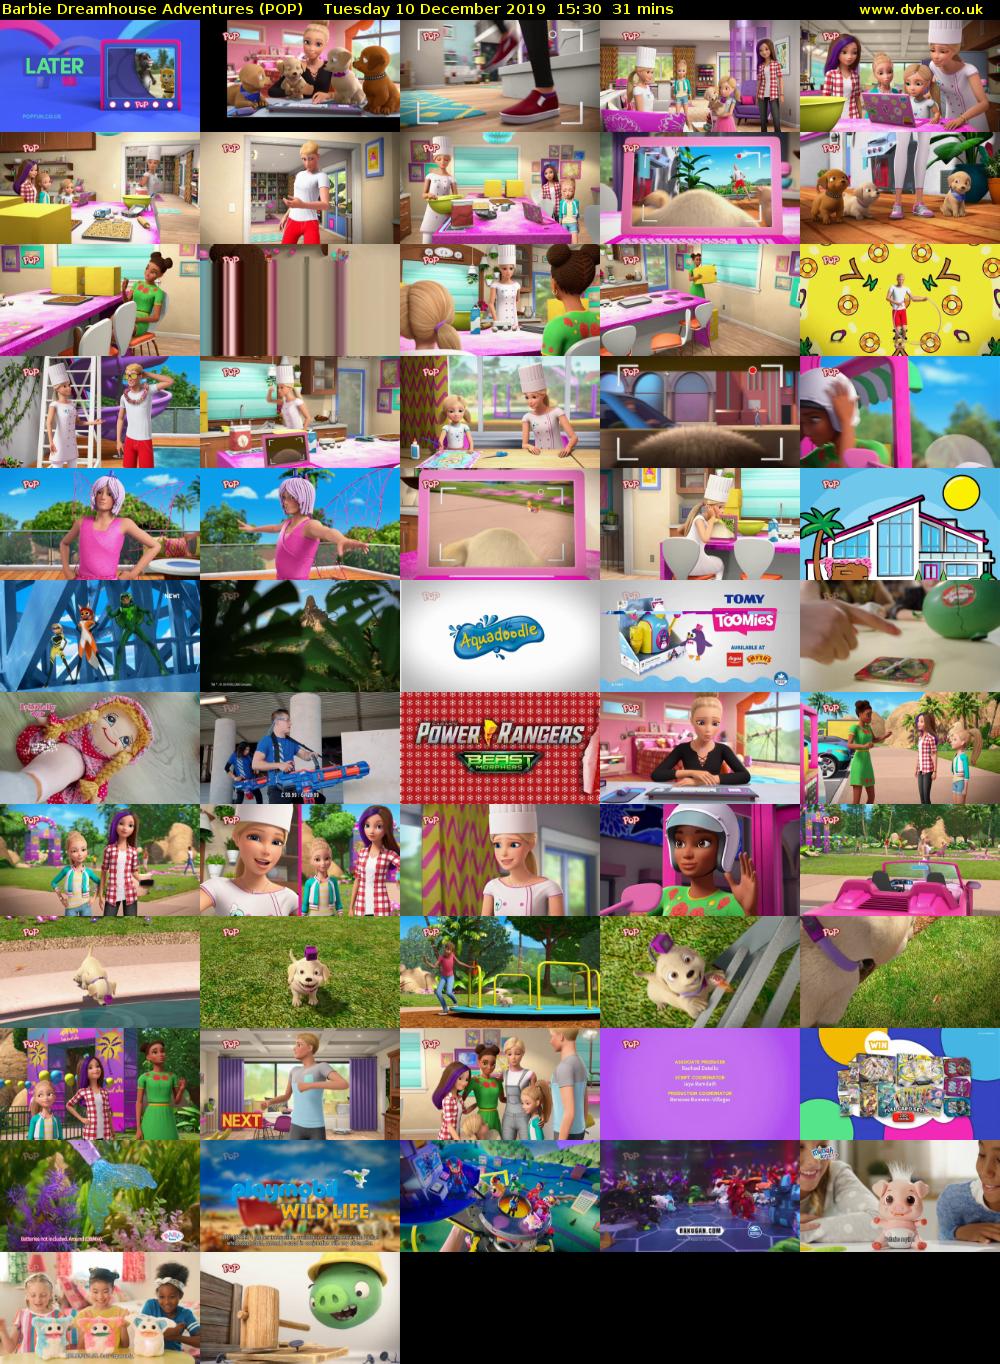 Barbie Dreamhouse Adventures (POP) Tuesday 10 December 2019 15:30 - 16:01